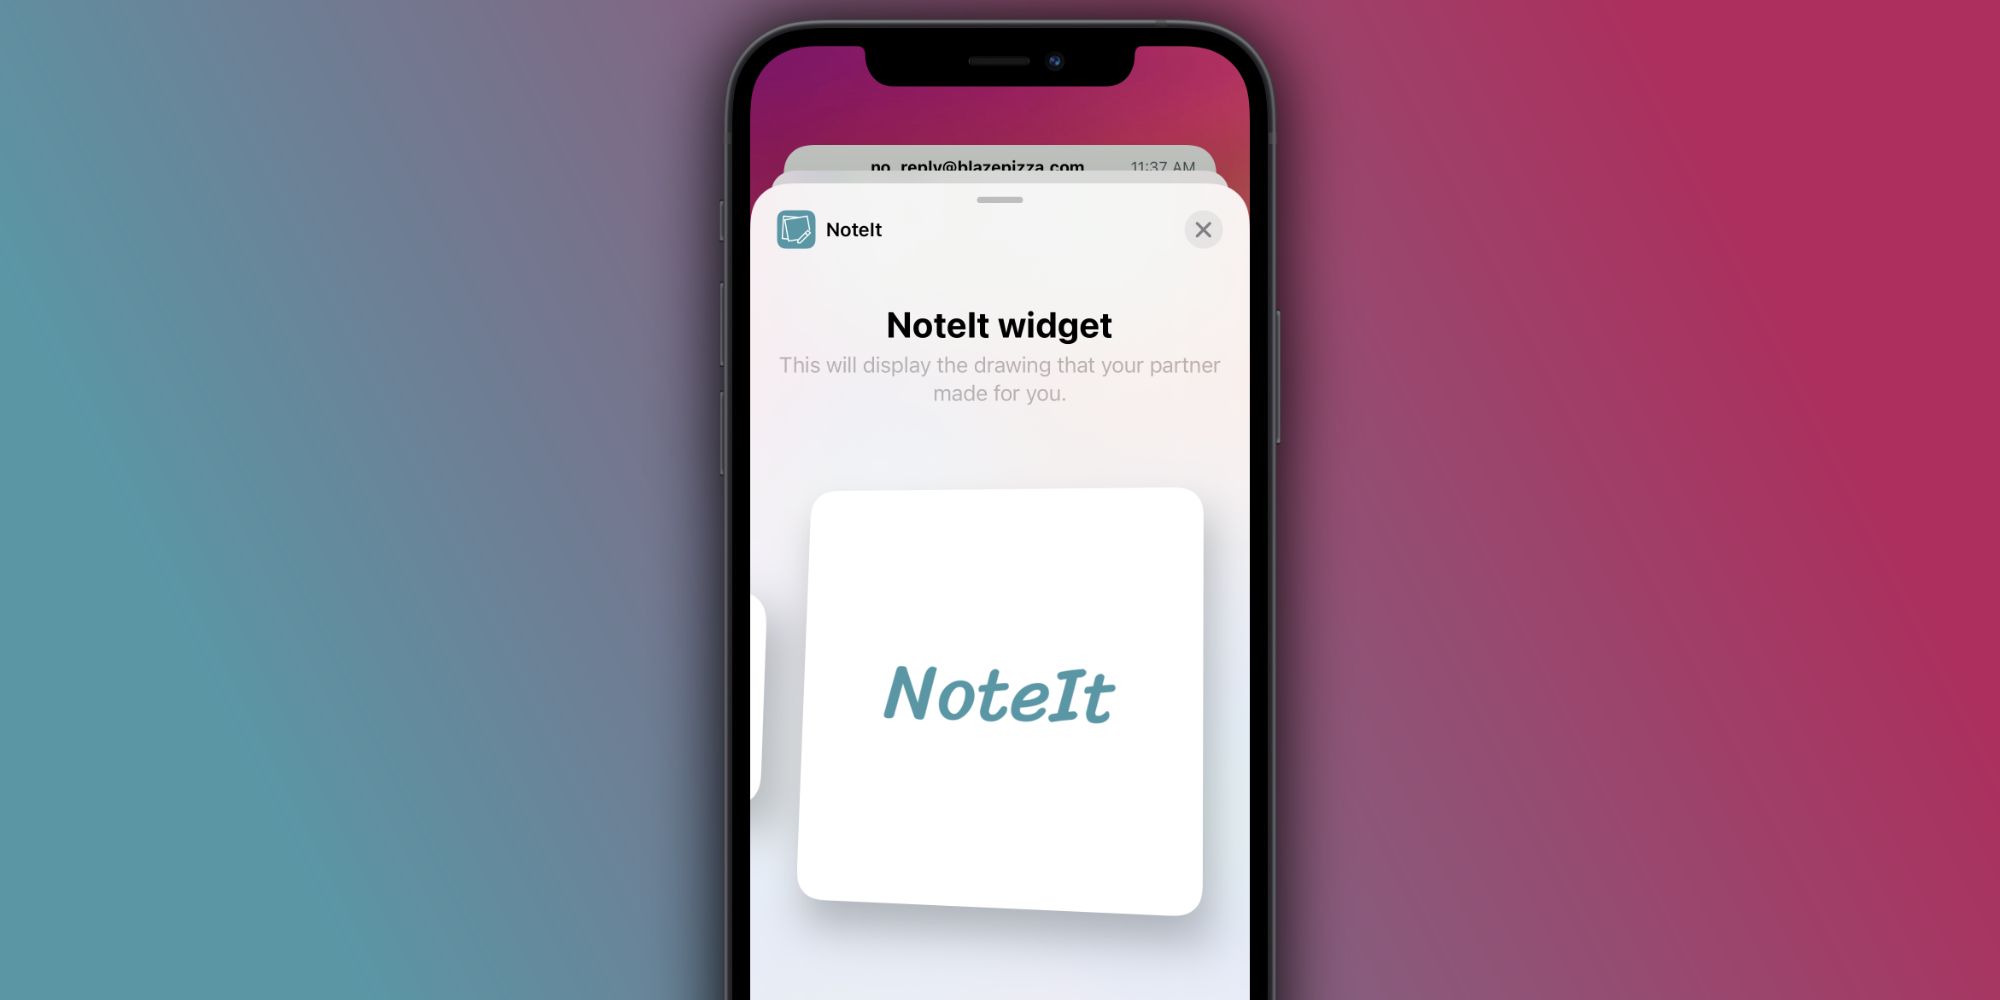 Adding the NoteIt widget on an iPhone